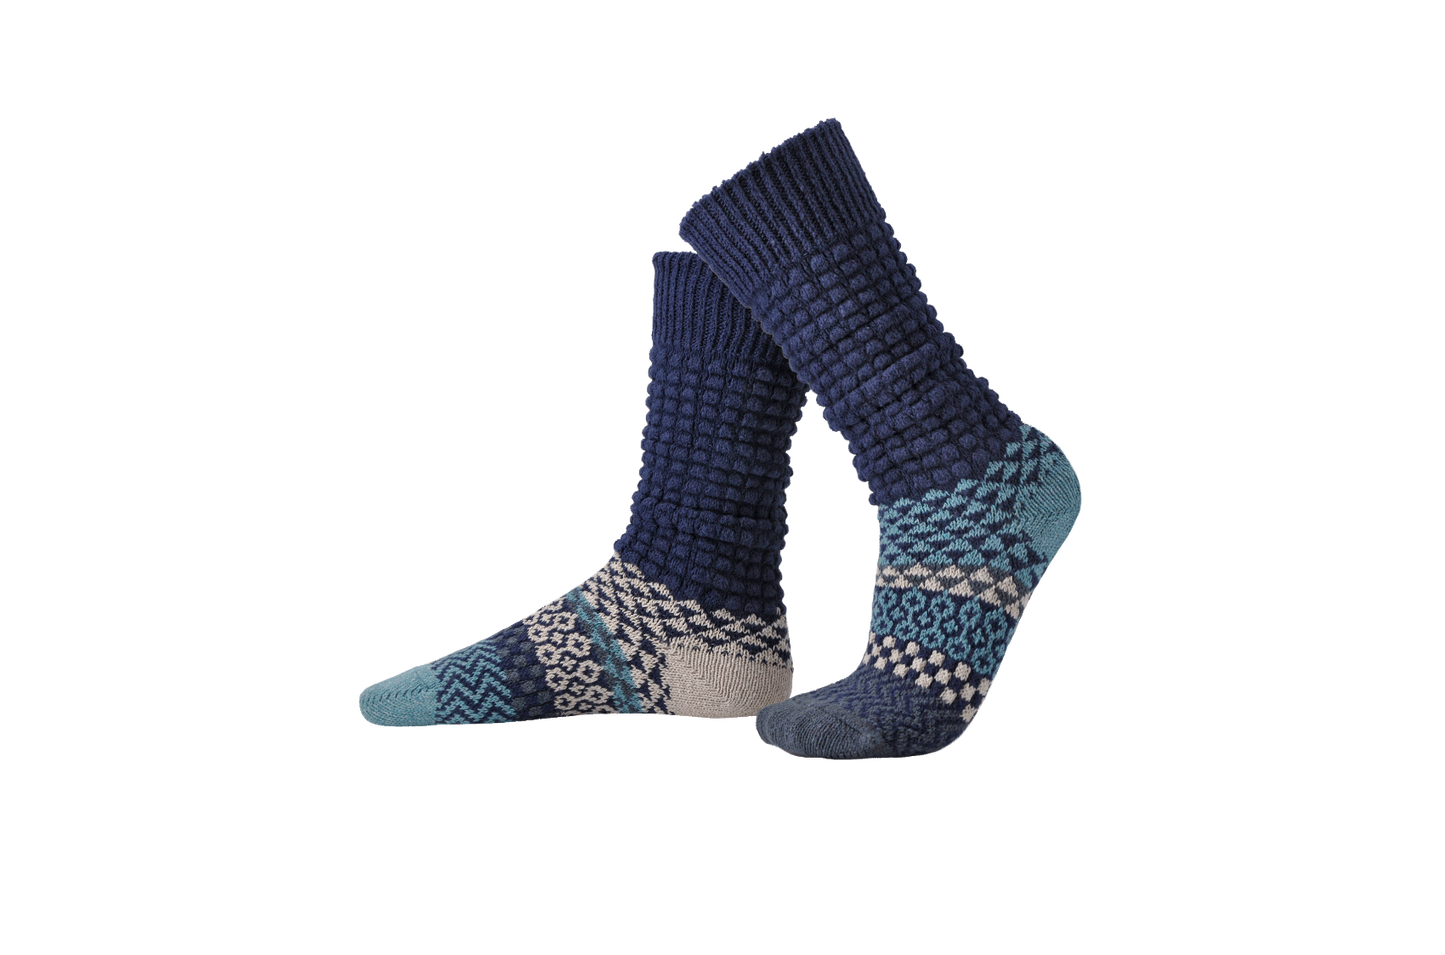 Fusion Slouch Socks